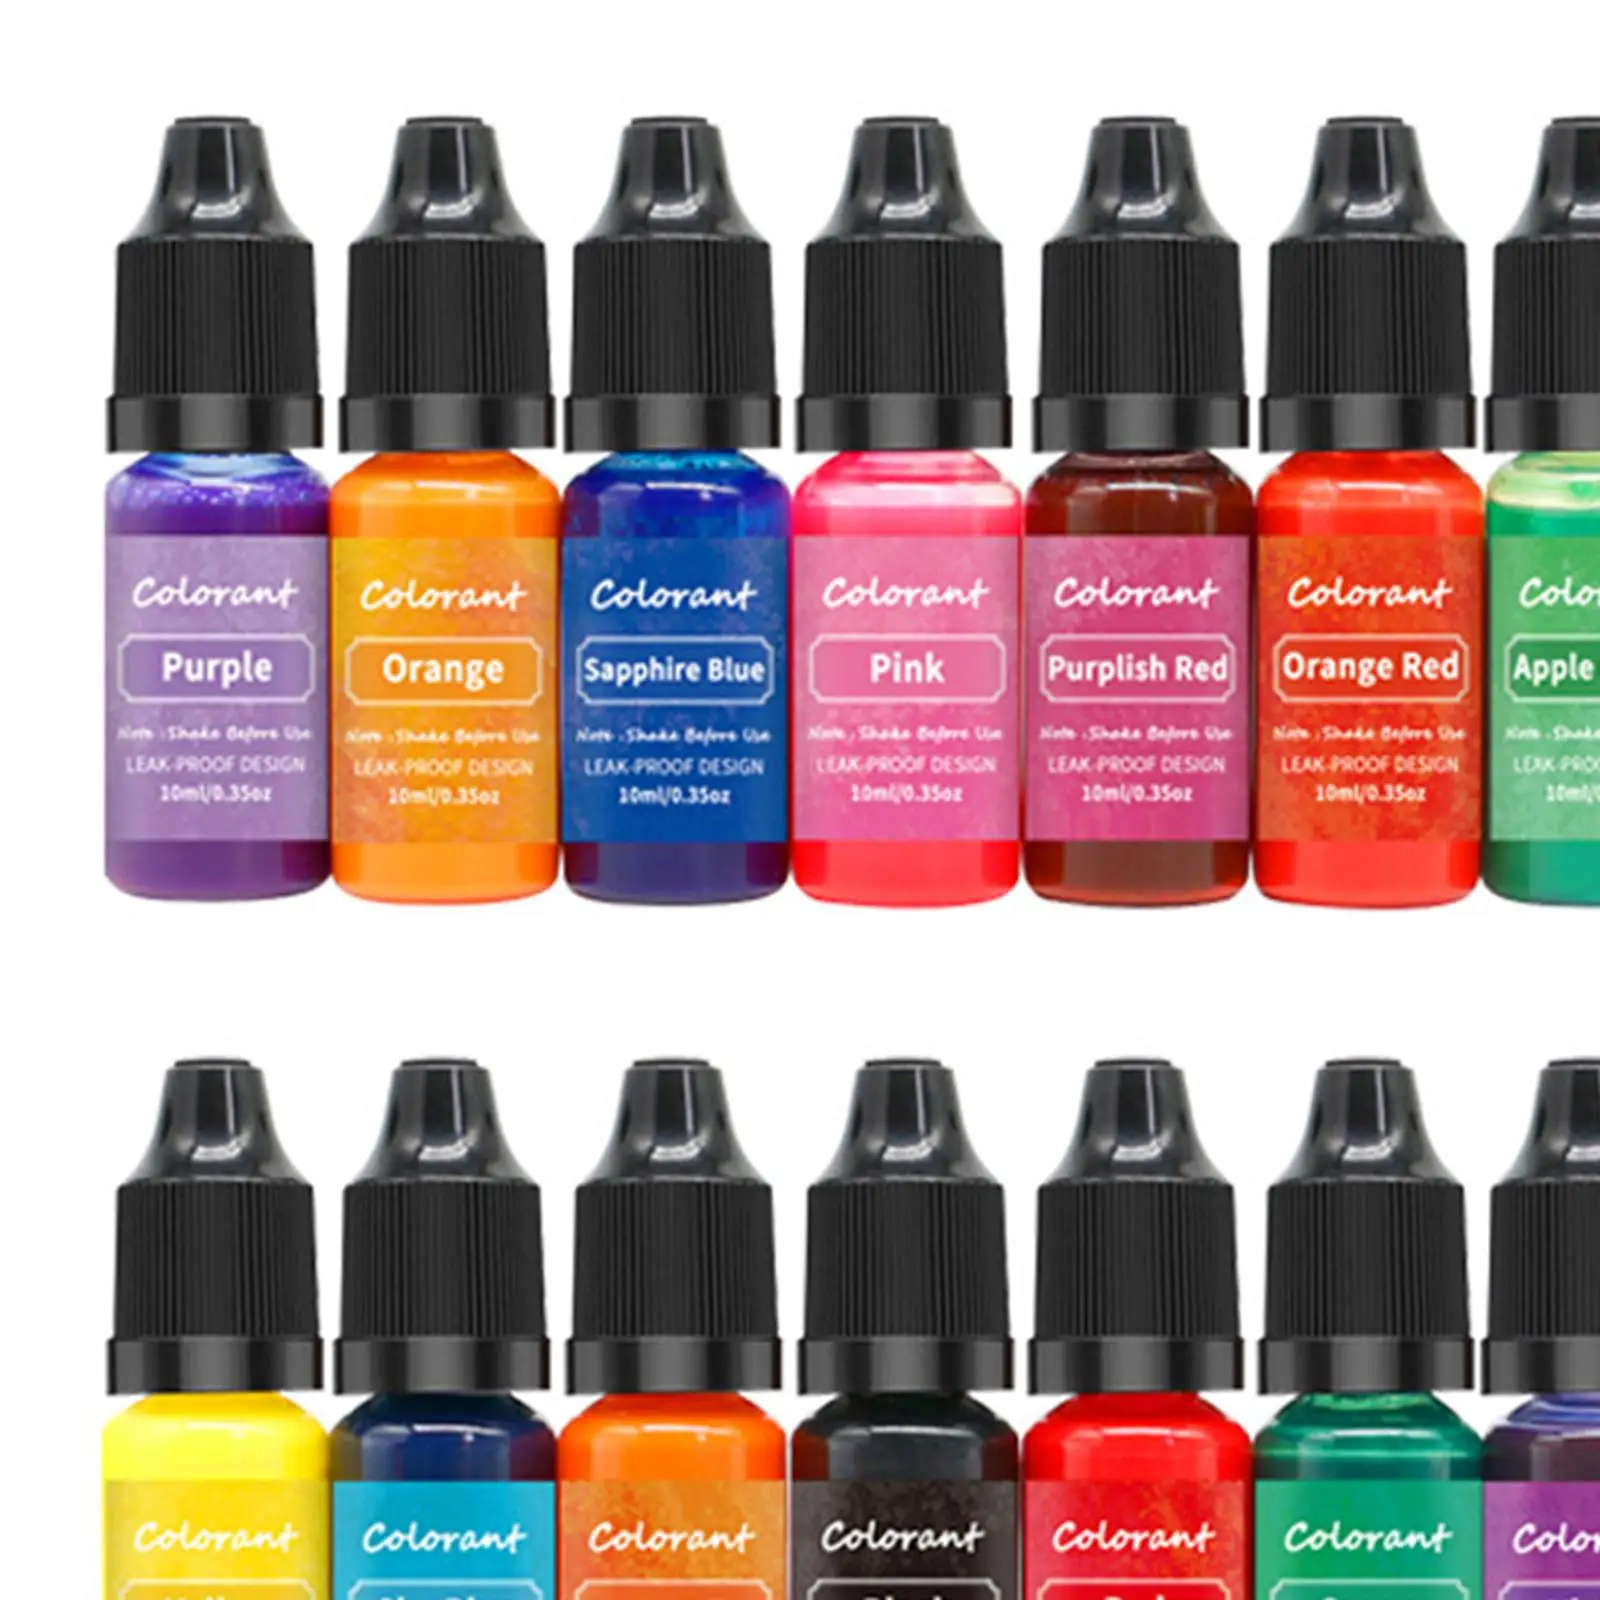 20 Colors Candle Dyes Pigment Liquid Colorant Pigment DIY Candle Soap Coloring Handmade Crafts Resin Pigment